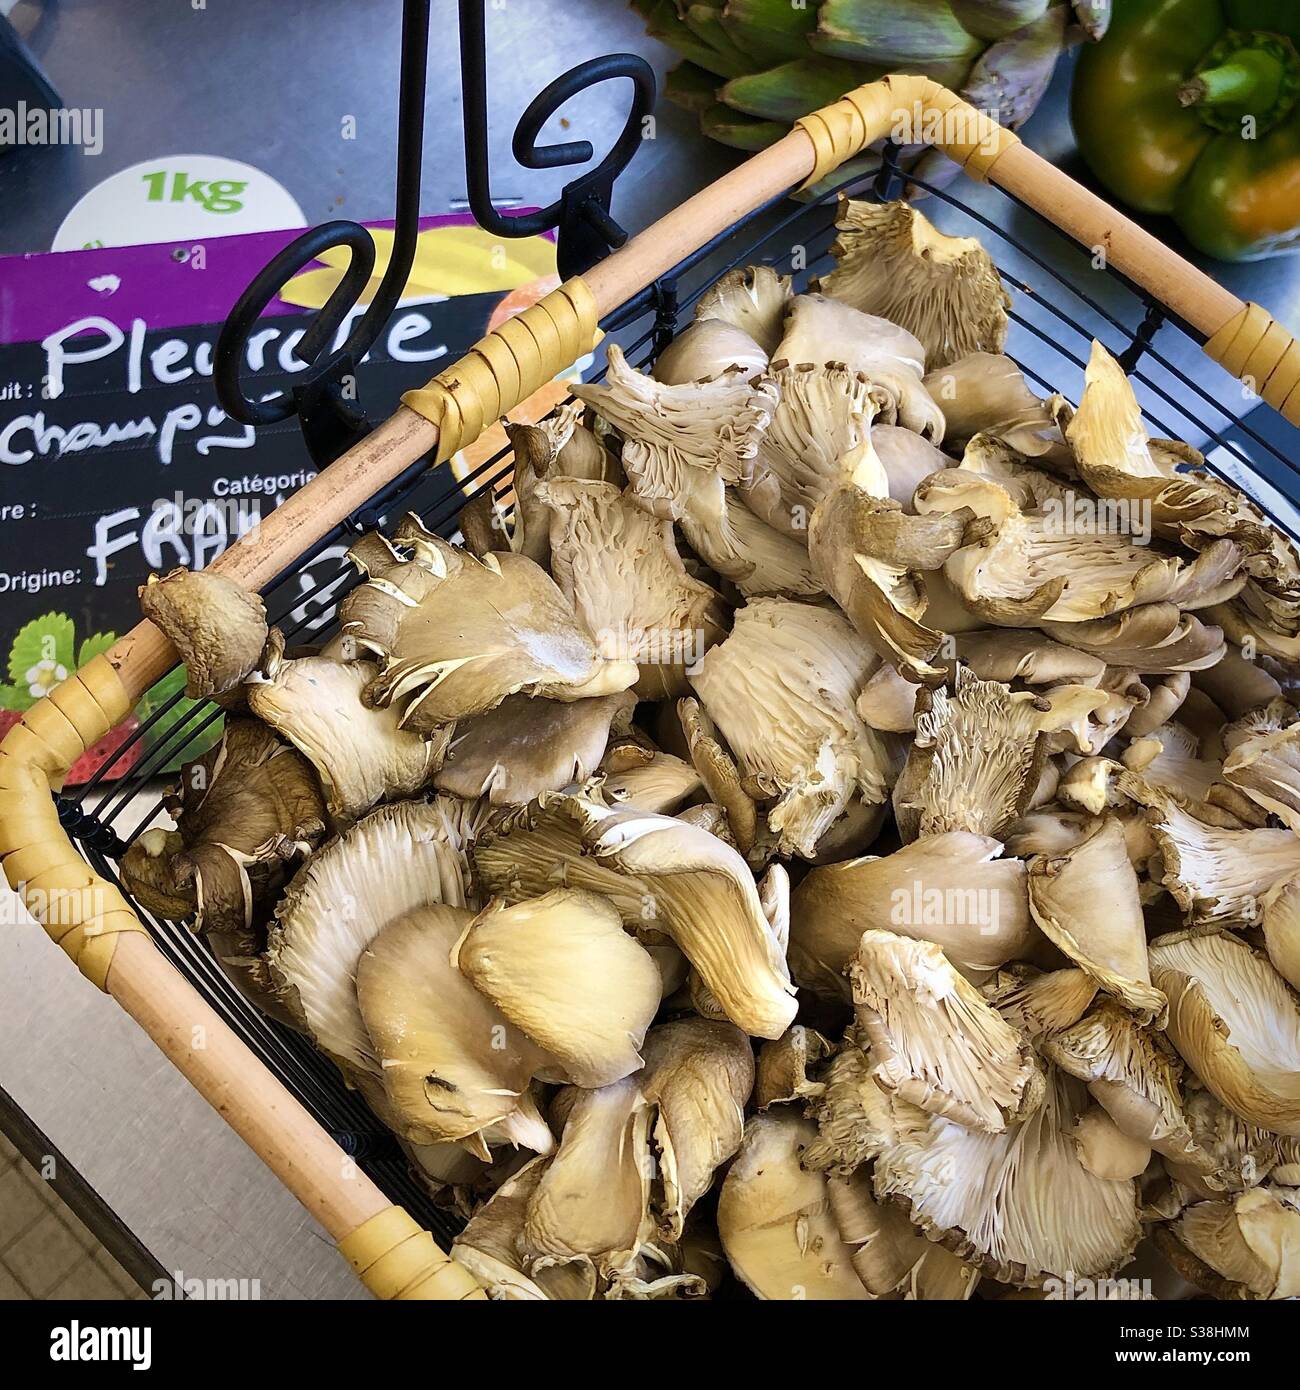 Korb mit Pilzen aus Pleurotte. Stockfoto